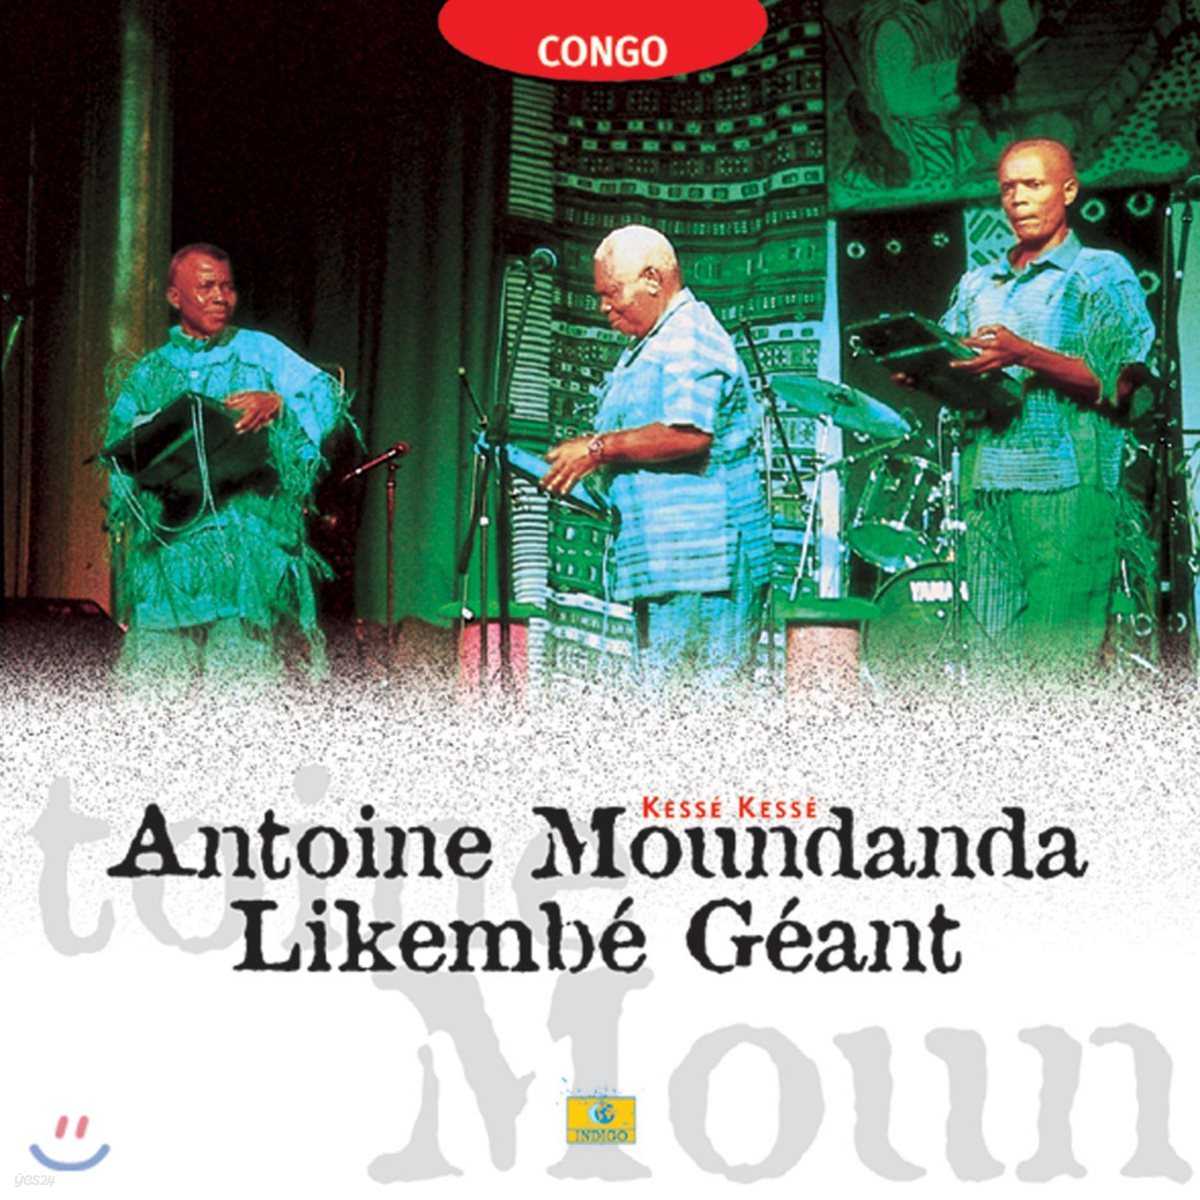 Congo: Antoine Moundanda, Likembe Geant - Kesse Kesse